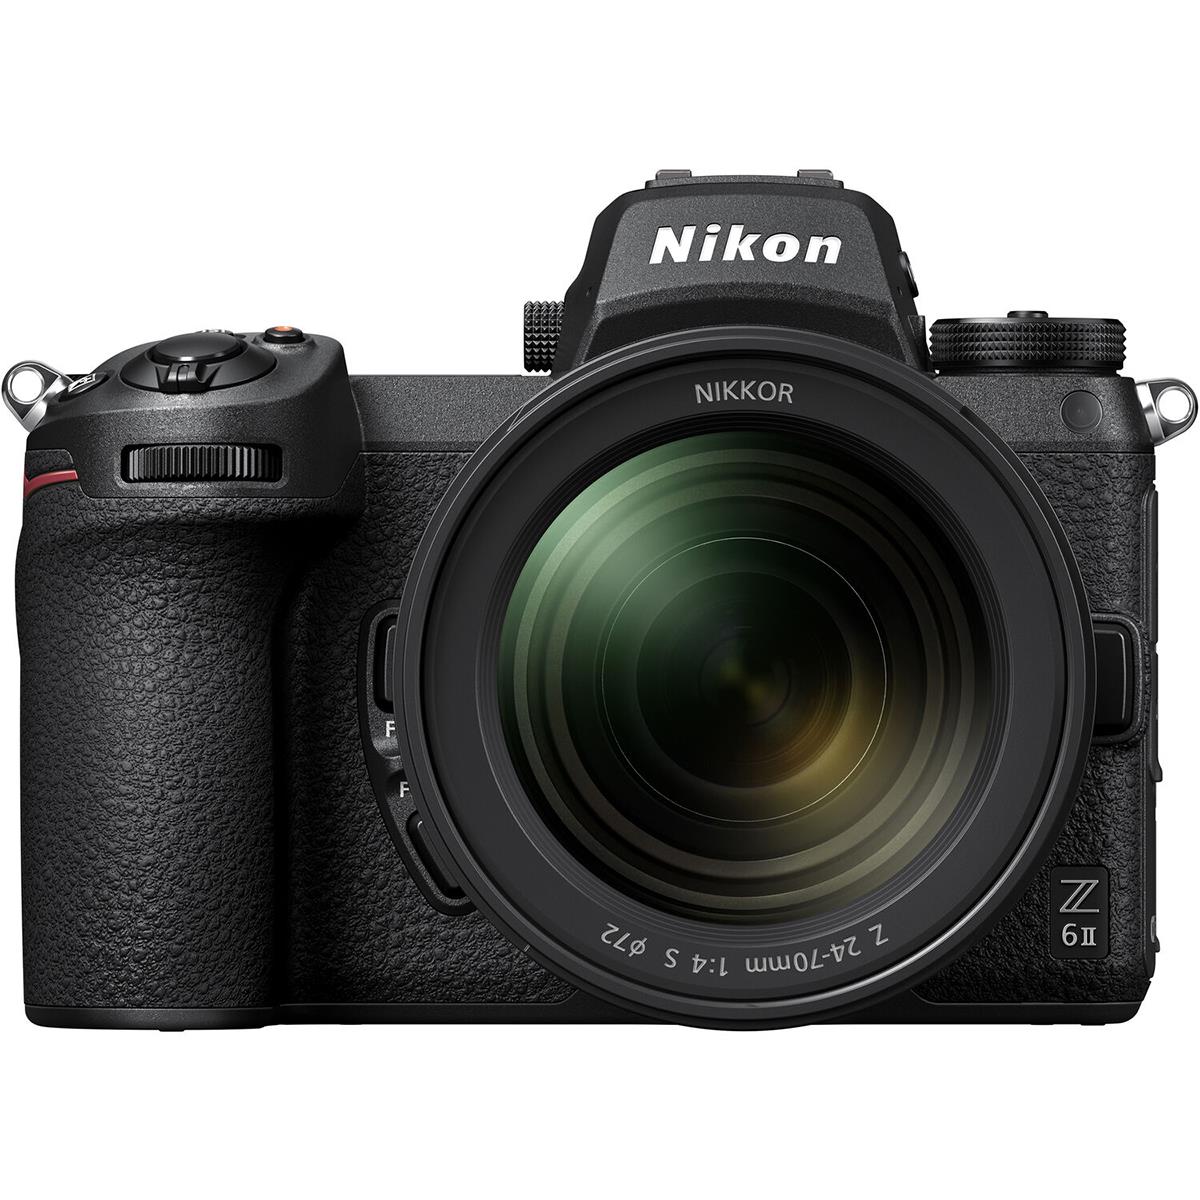 Image of Nikon Z 6II Mirrorless Camera with NIKKOR Z 24-70mm f/4 S Lens